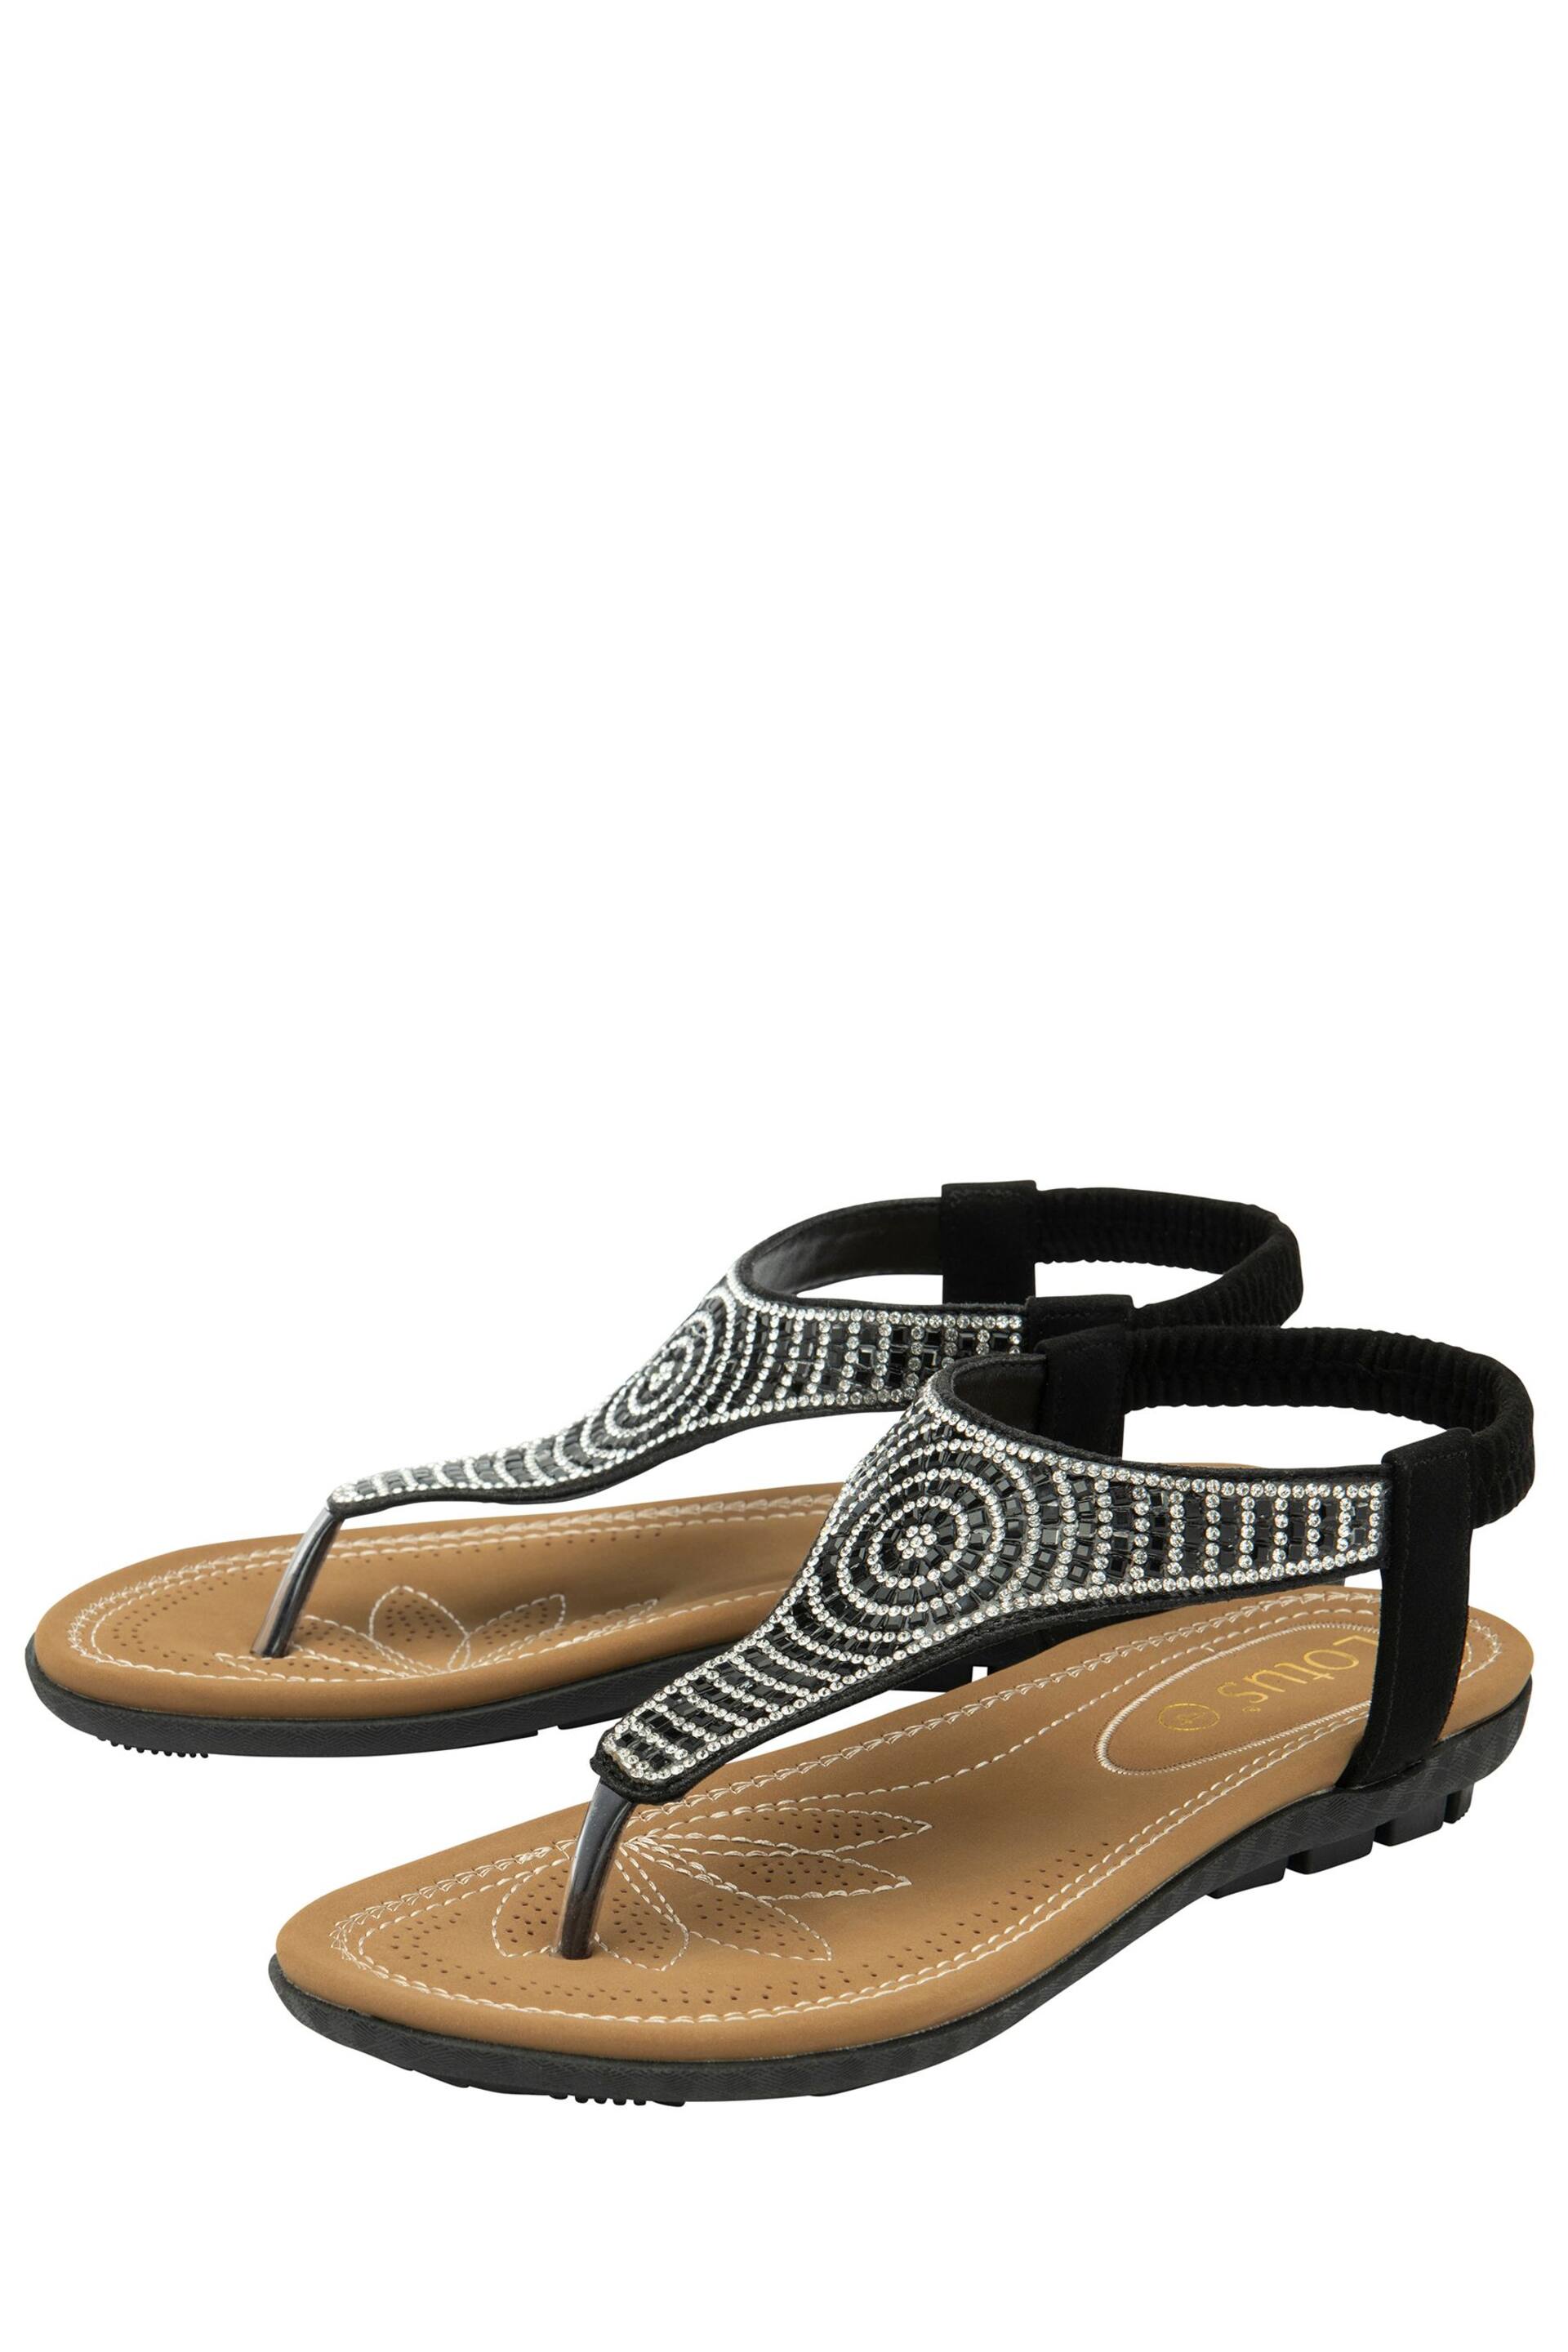 Lotus Black Casual Toe Thong Holiday Sandals - Image 2 of 4